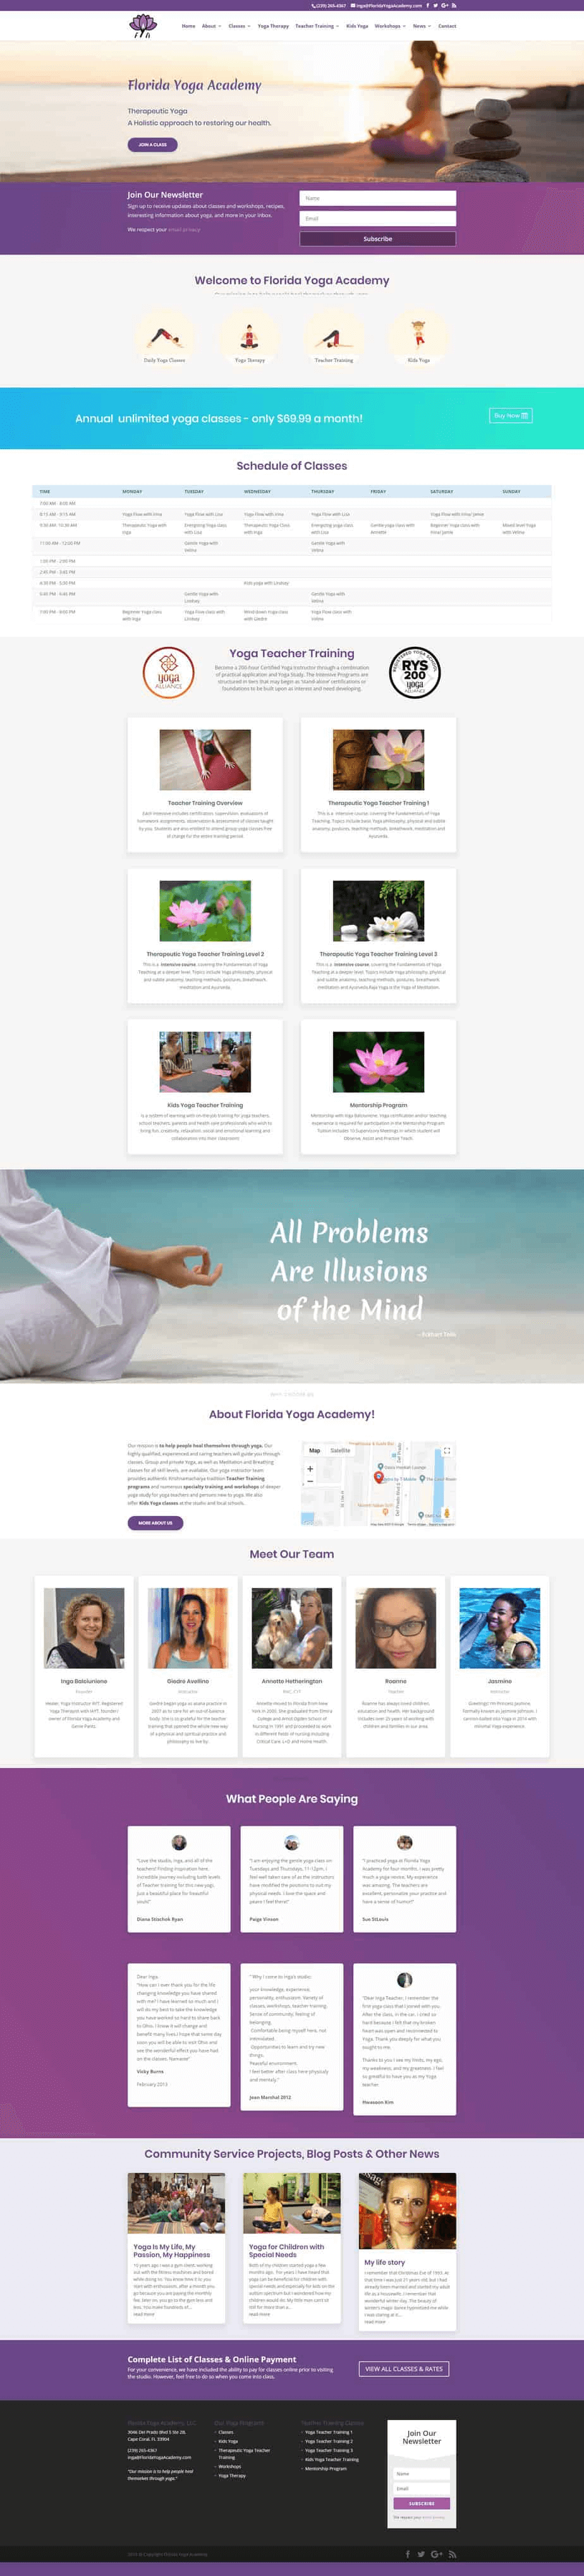 yoga studio website home page